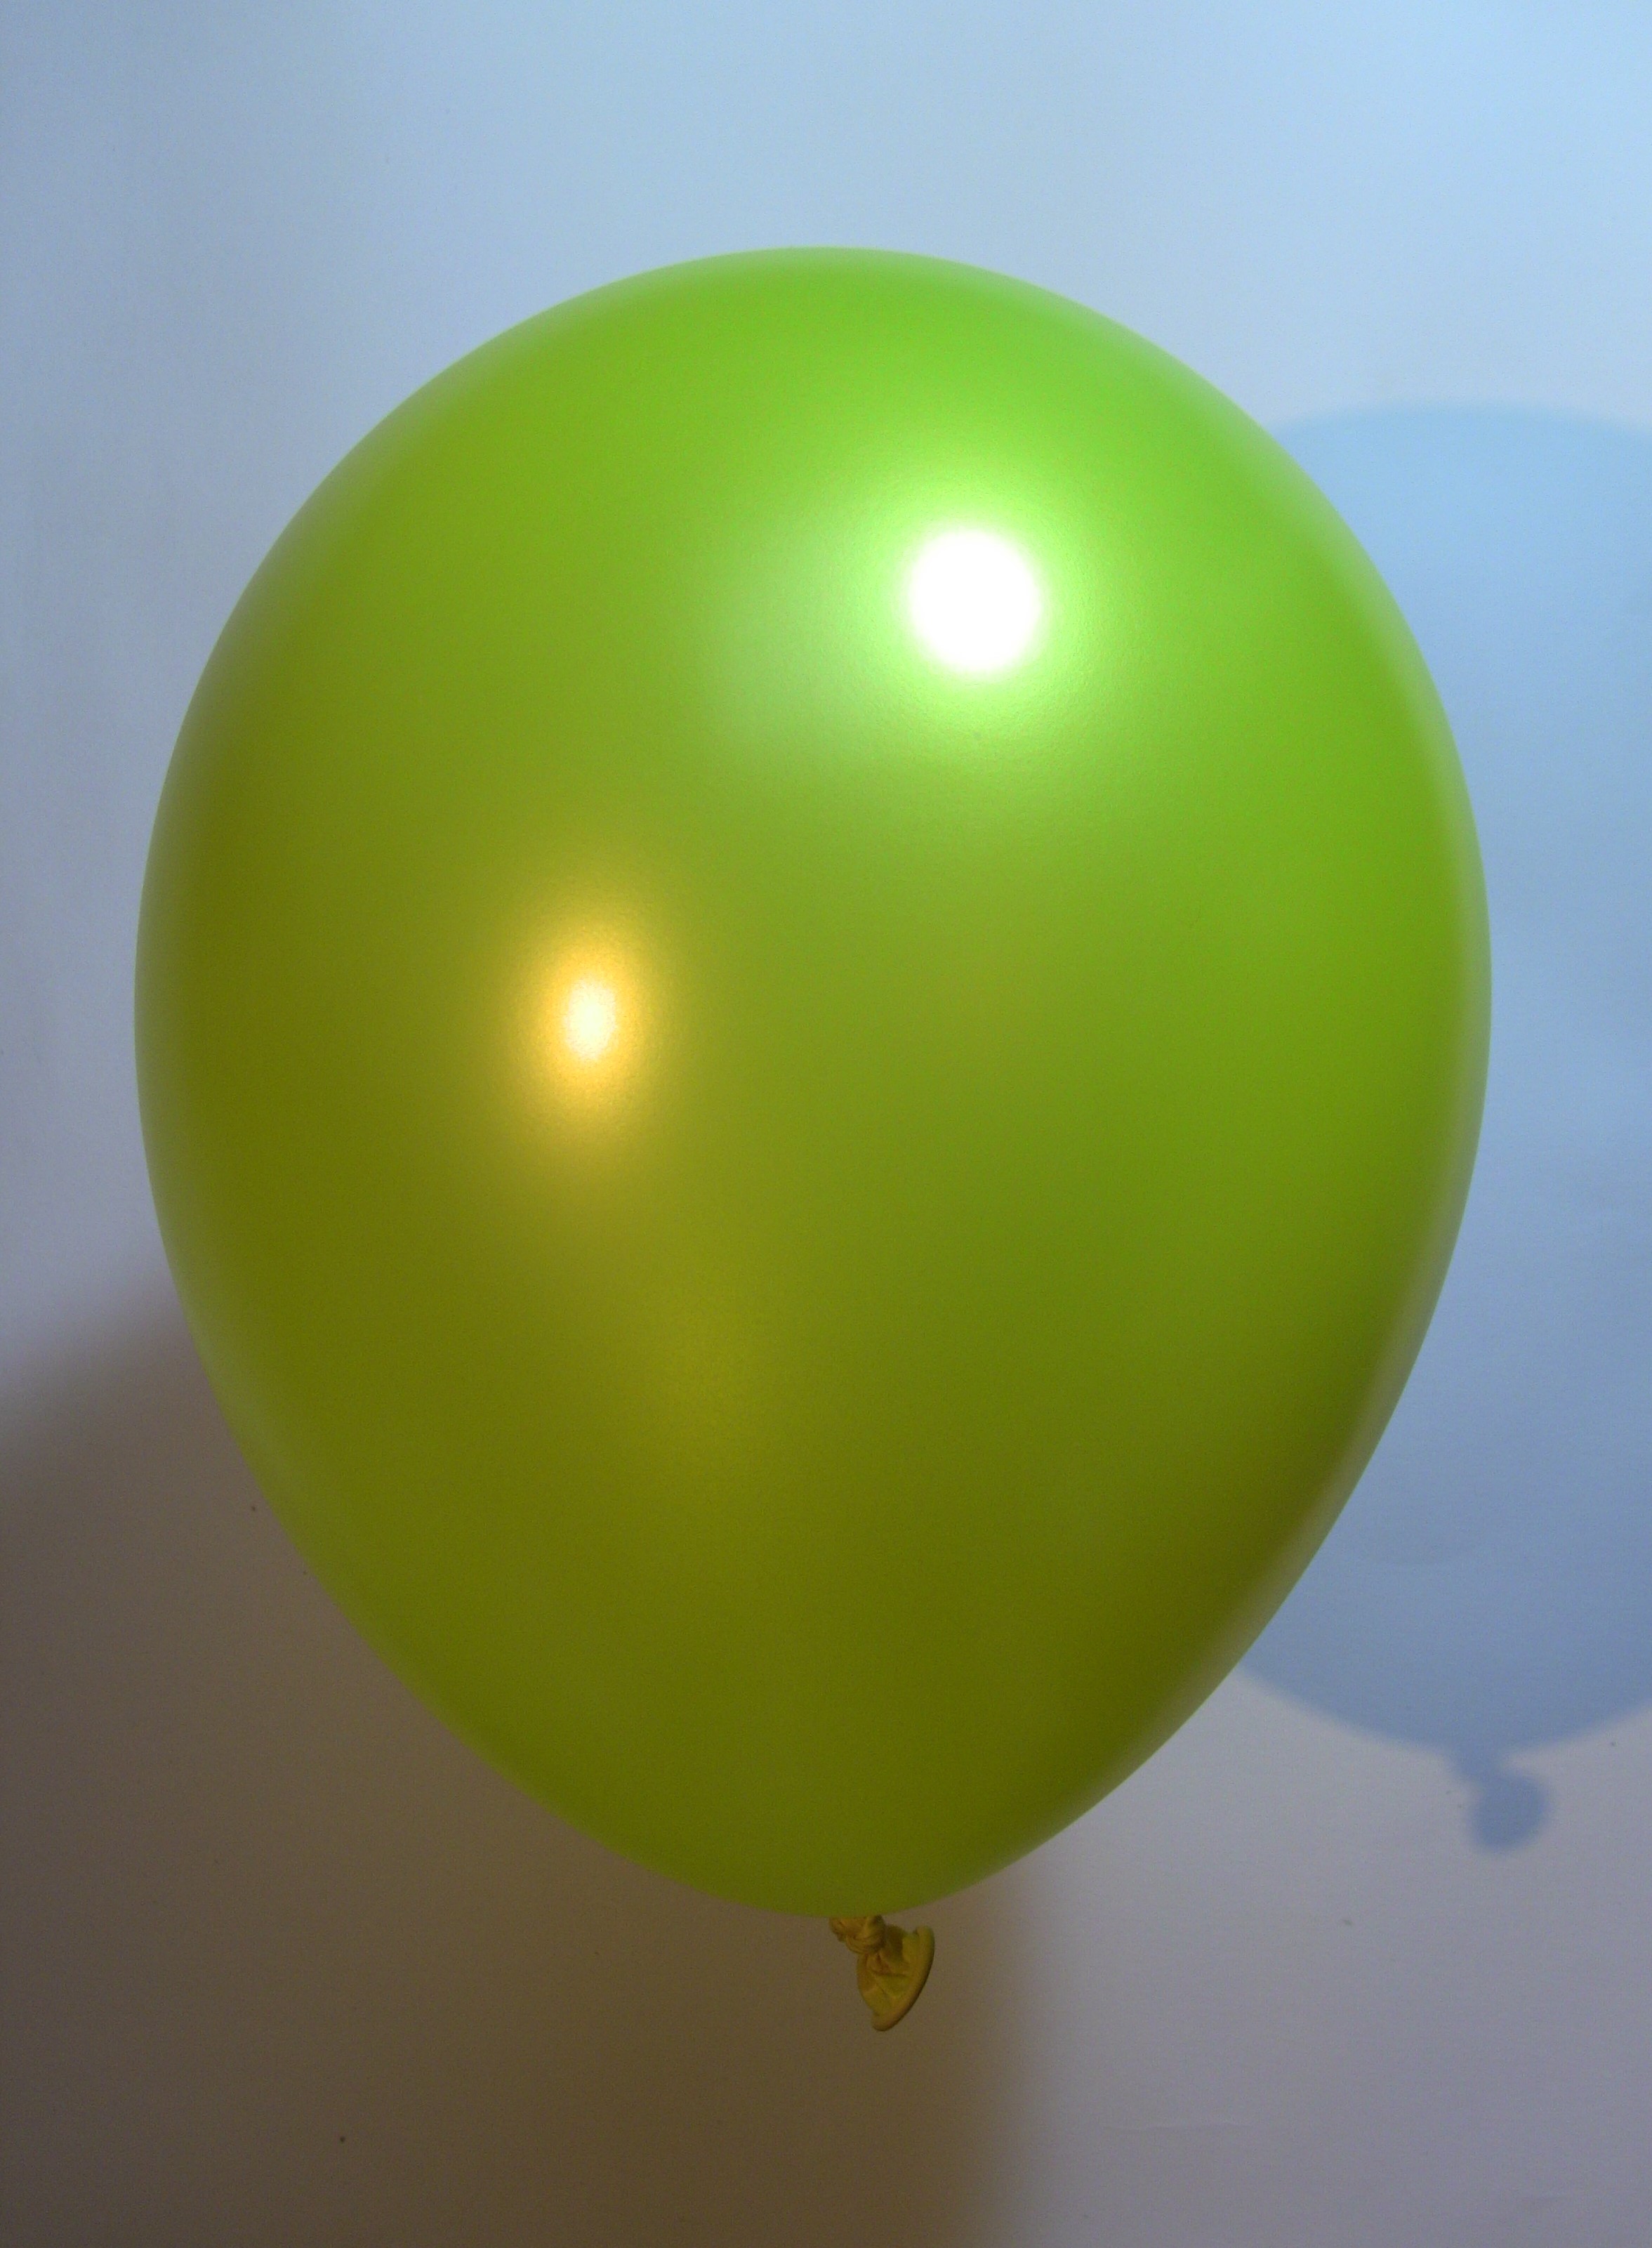 Ballon per stuk metallic geel